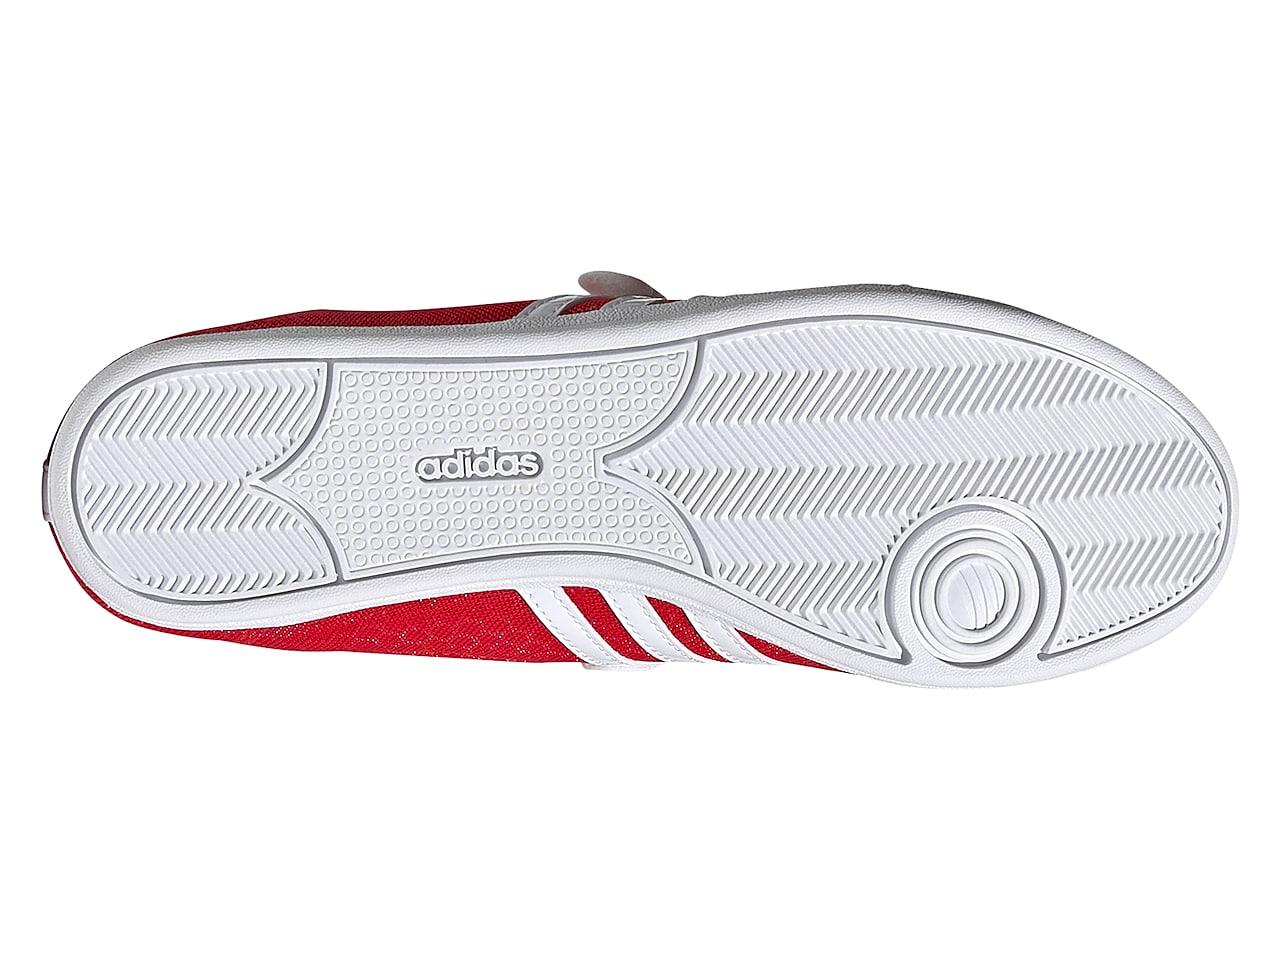 Adidas Shoes Womens 9 Ballerina Primeknit Cleats Golf Sneaker F33321 Gray  Low | eBay